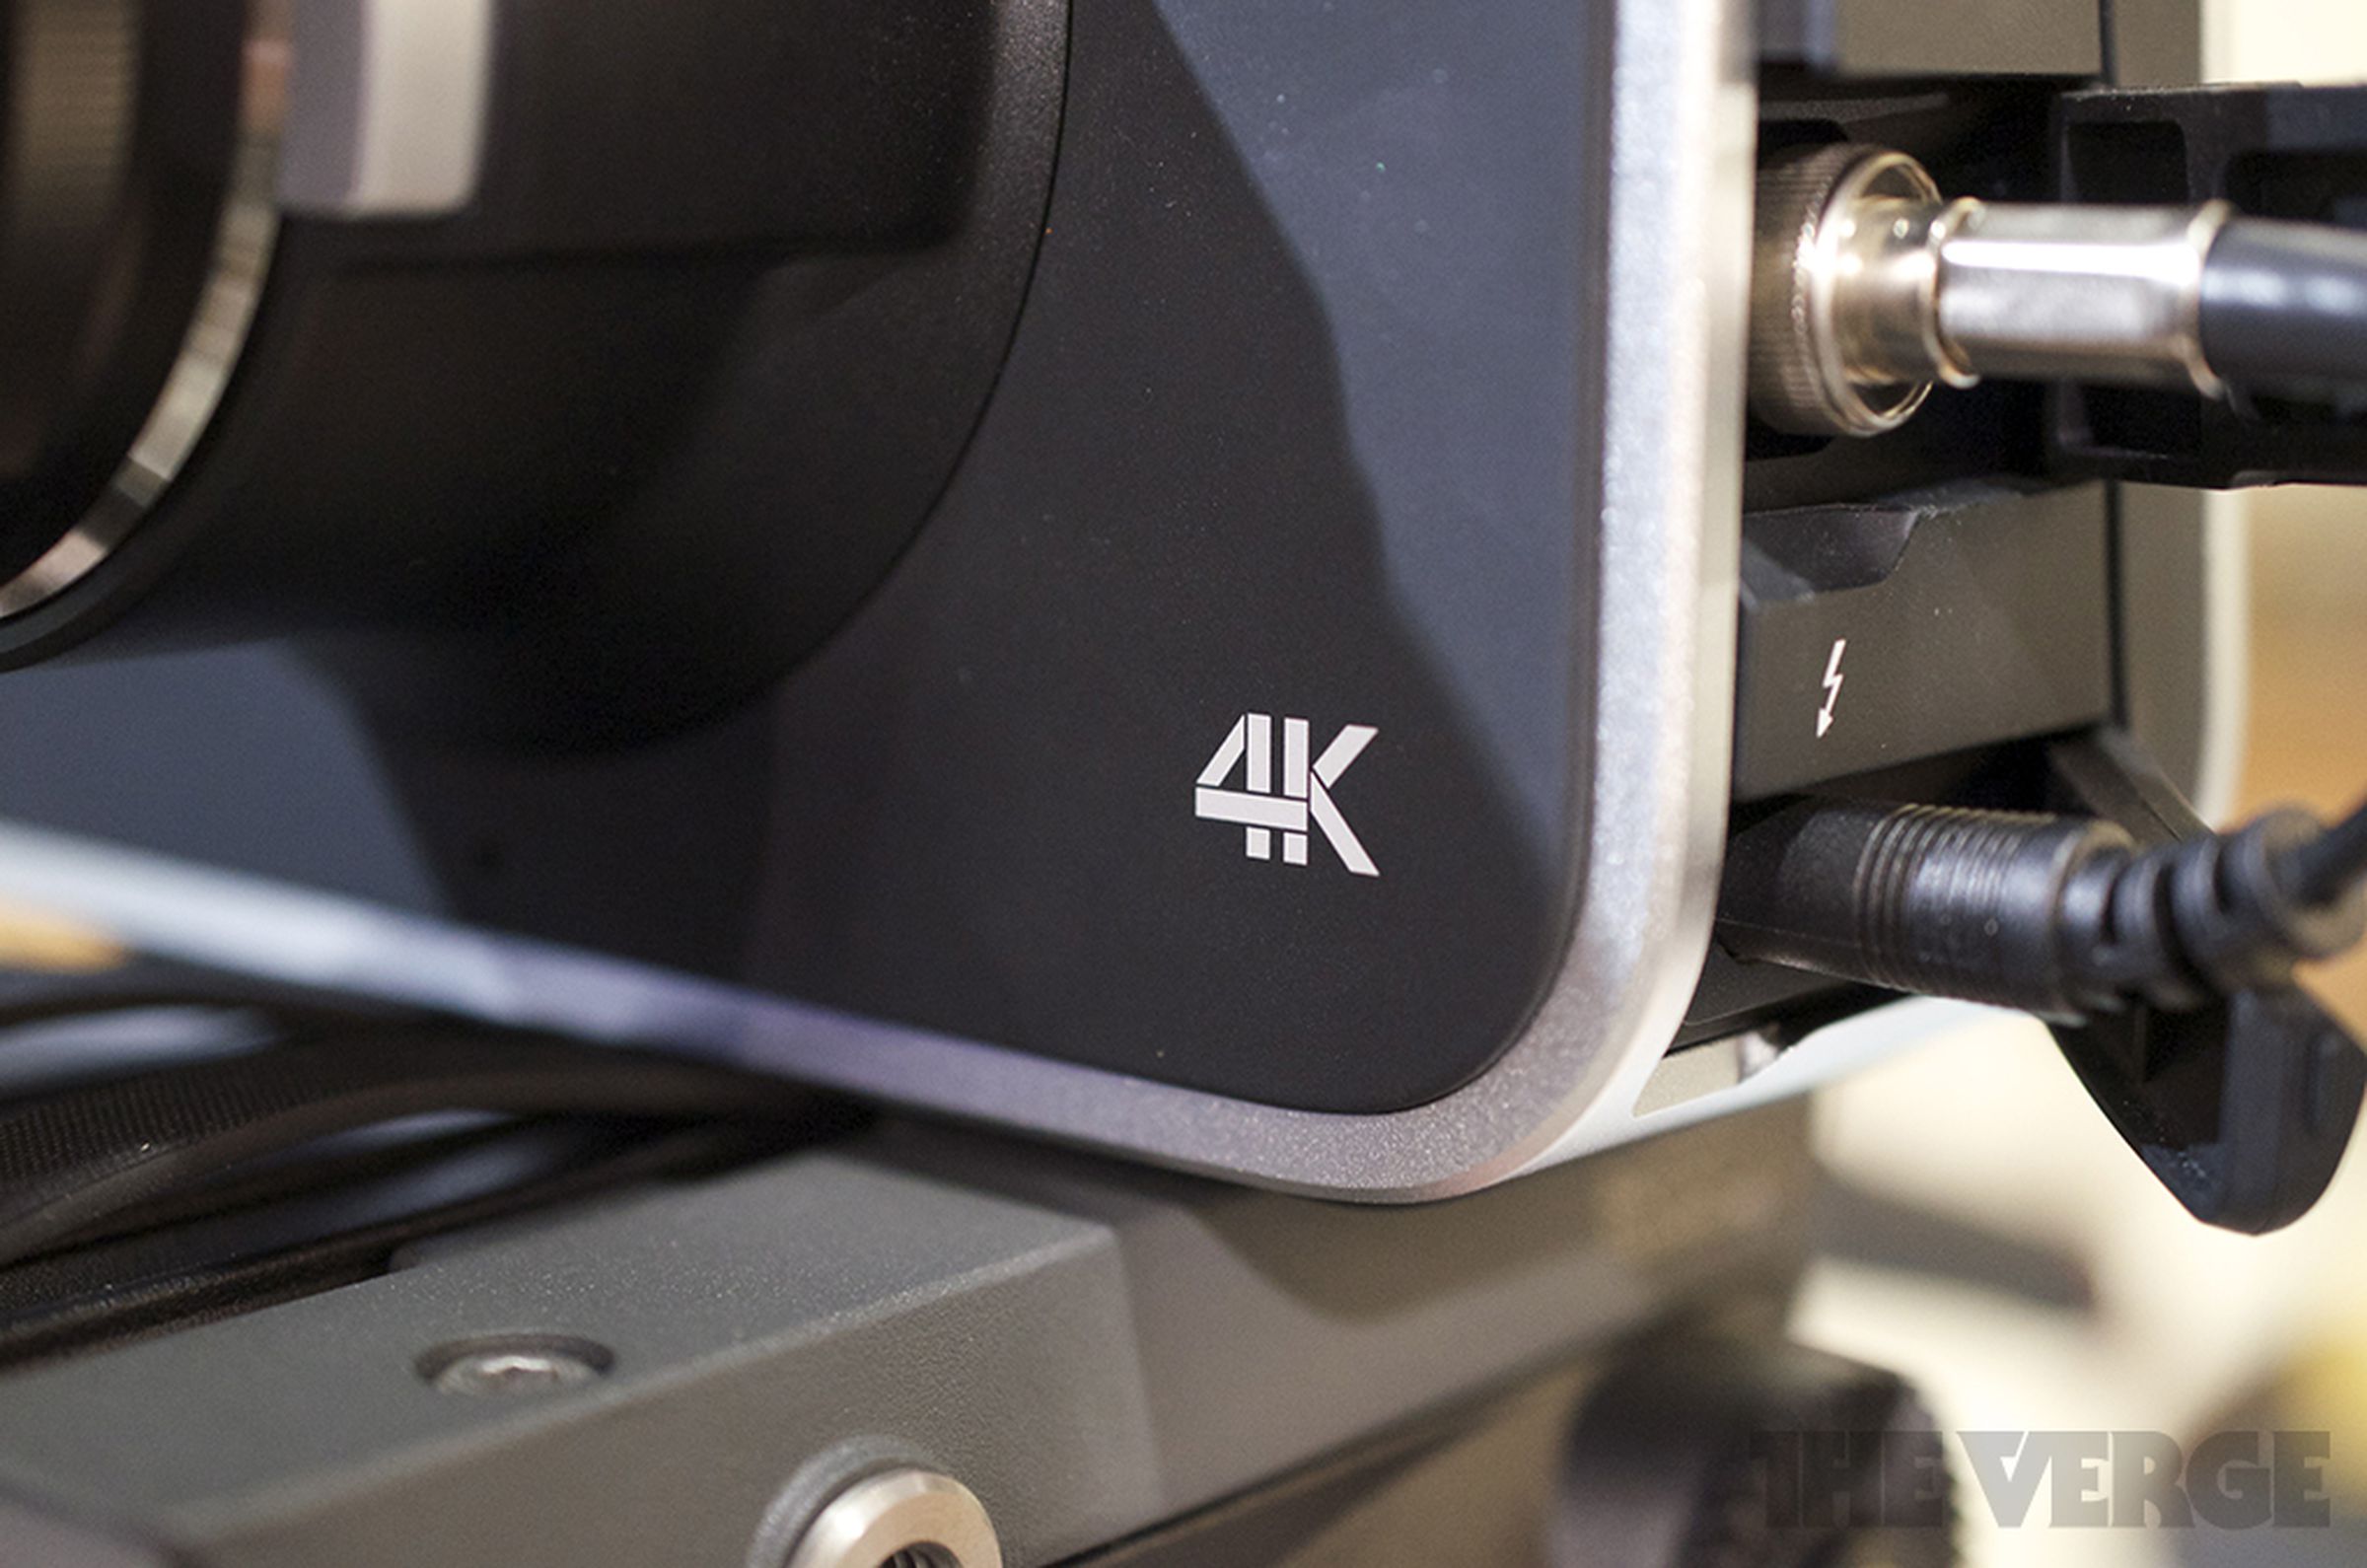 Blackmagic Pocket Cinema Camera and Production Camera 4K hands-on photos